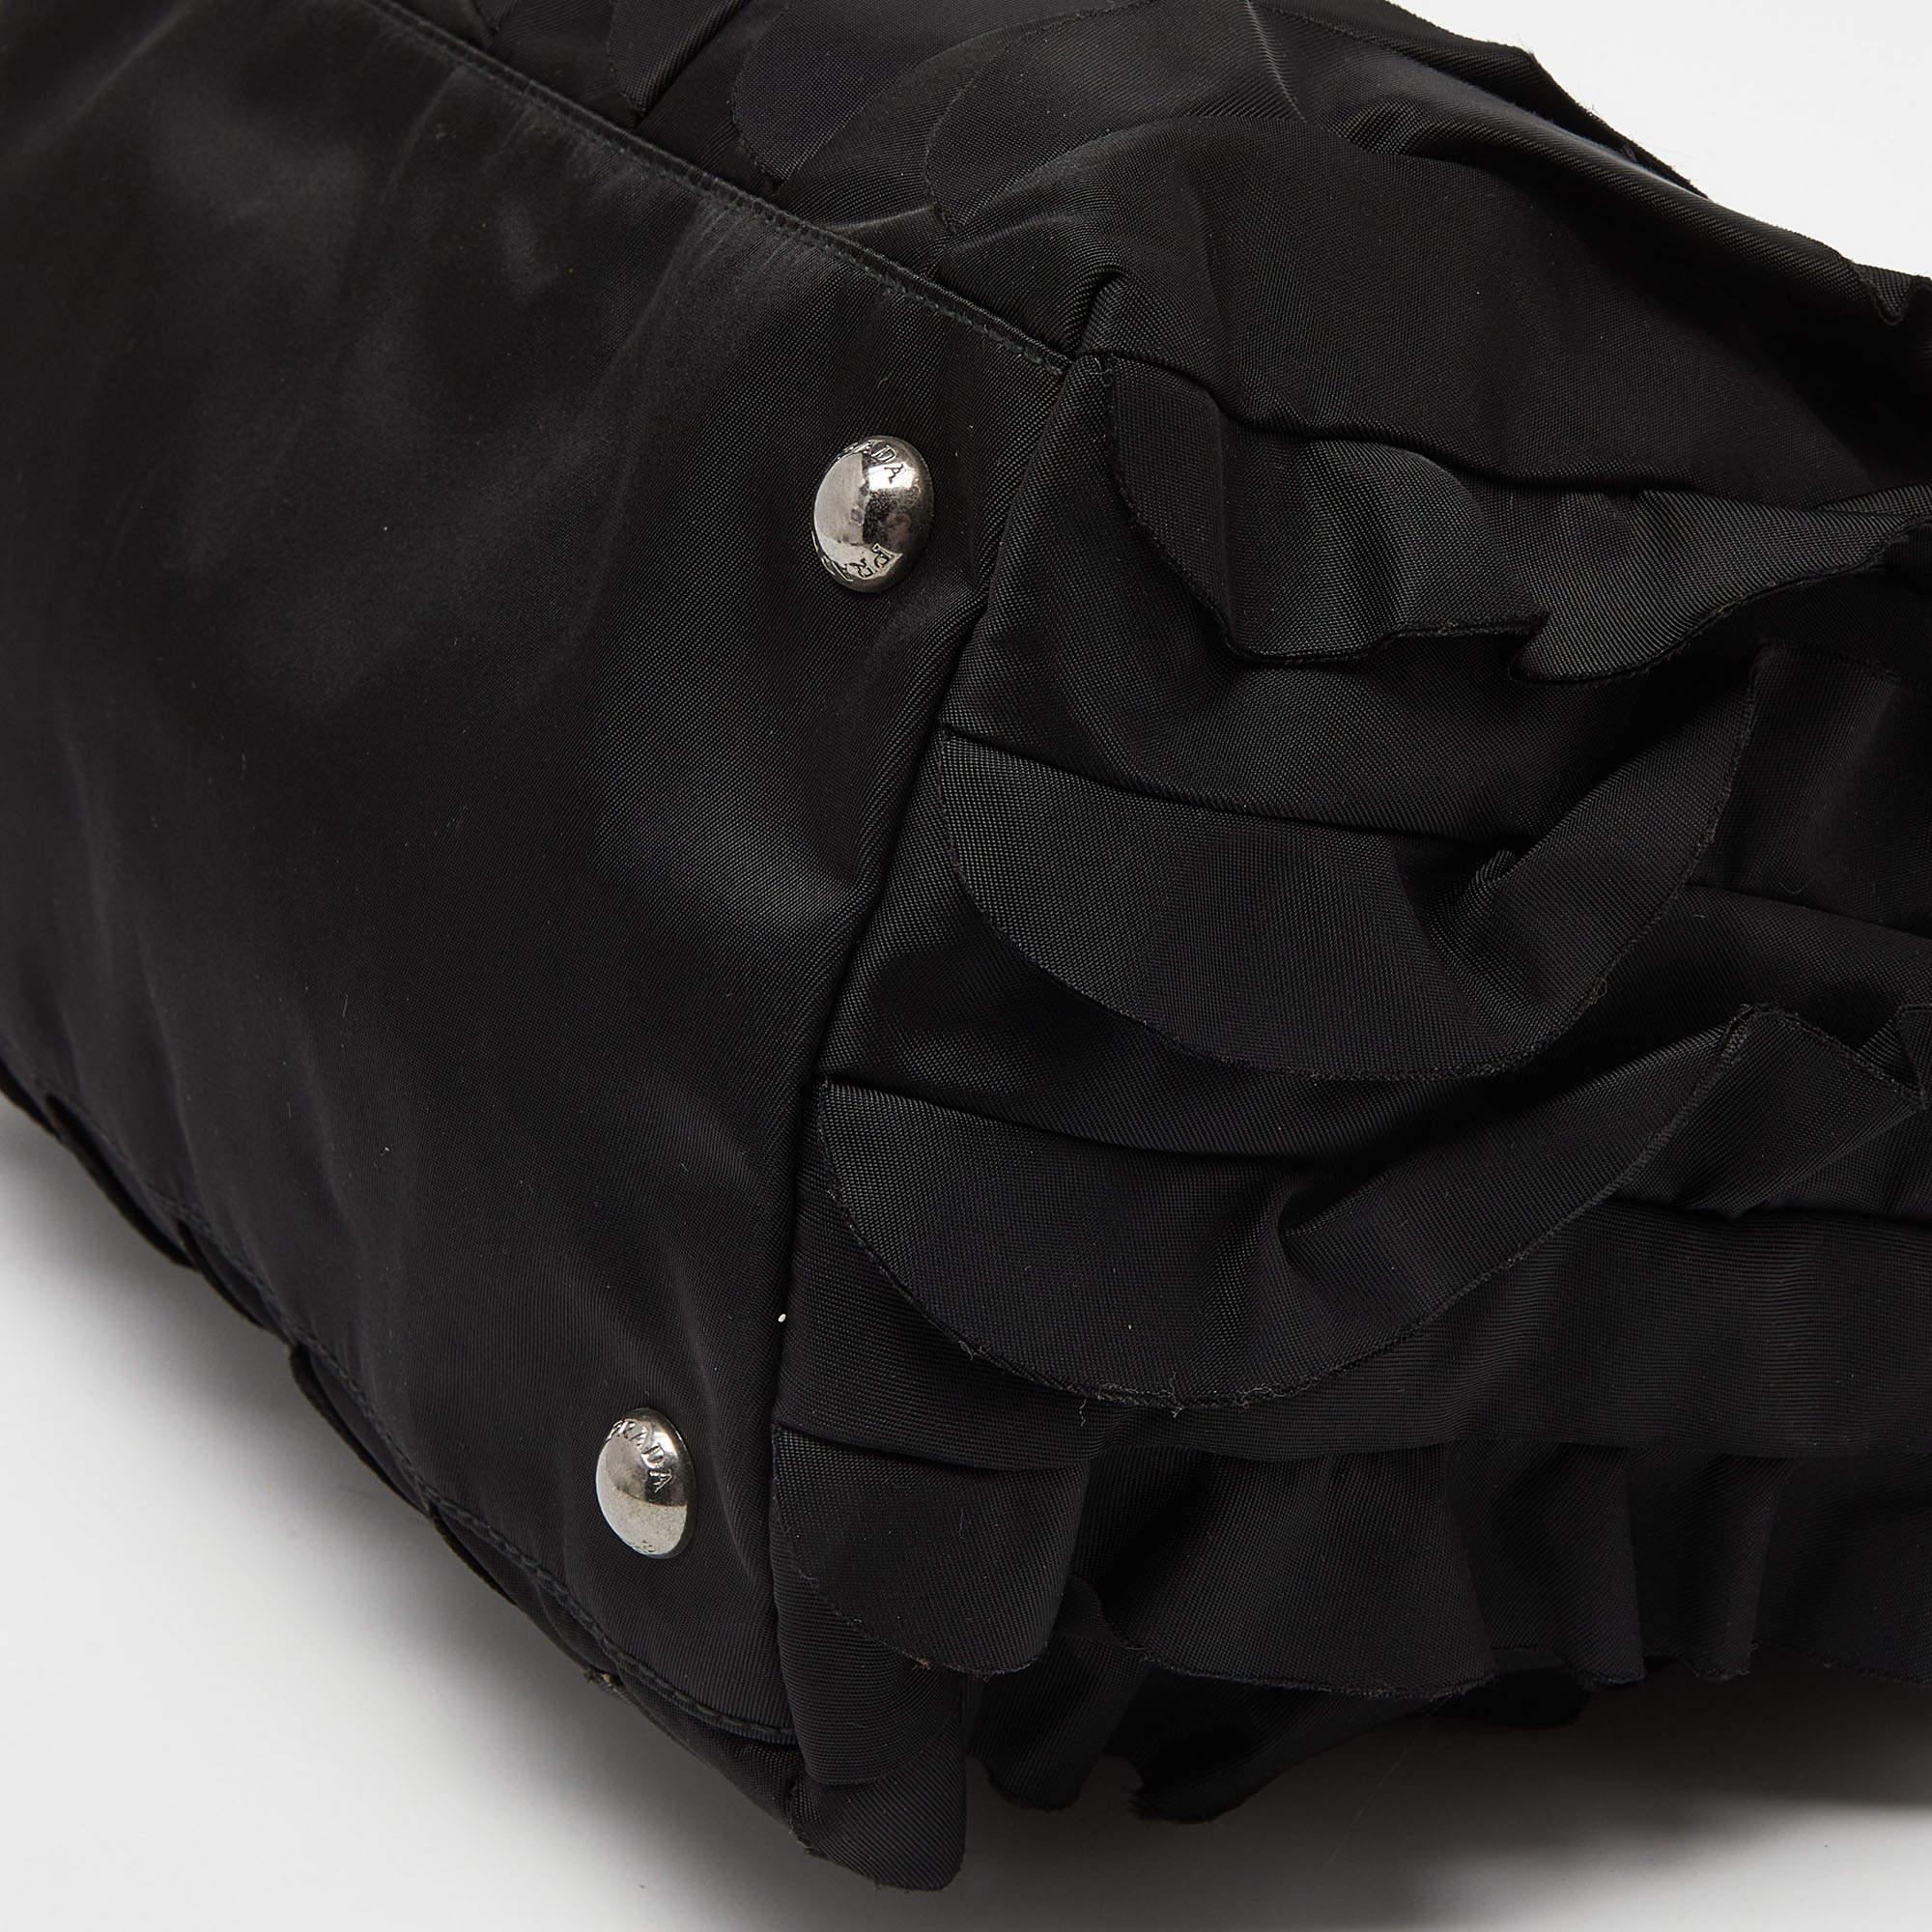 Prada Black Nylon and Leather Ruffle Tote For Sale 3